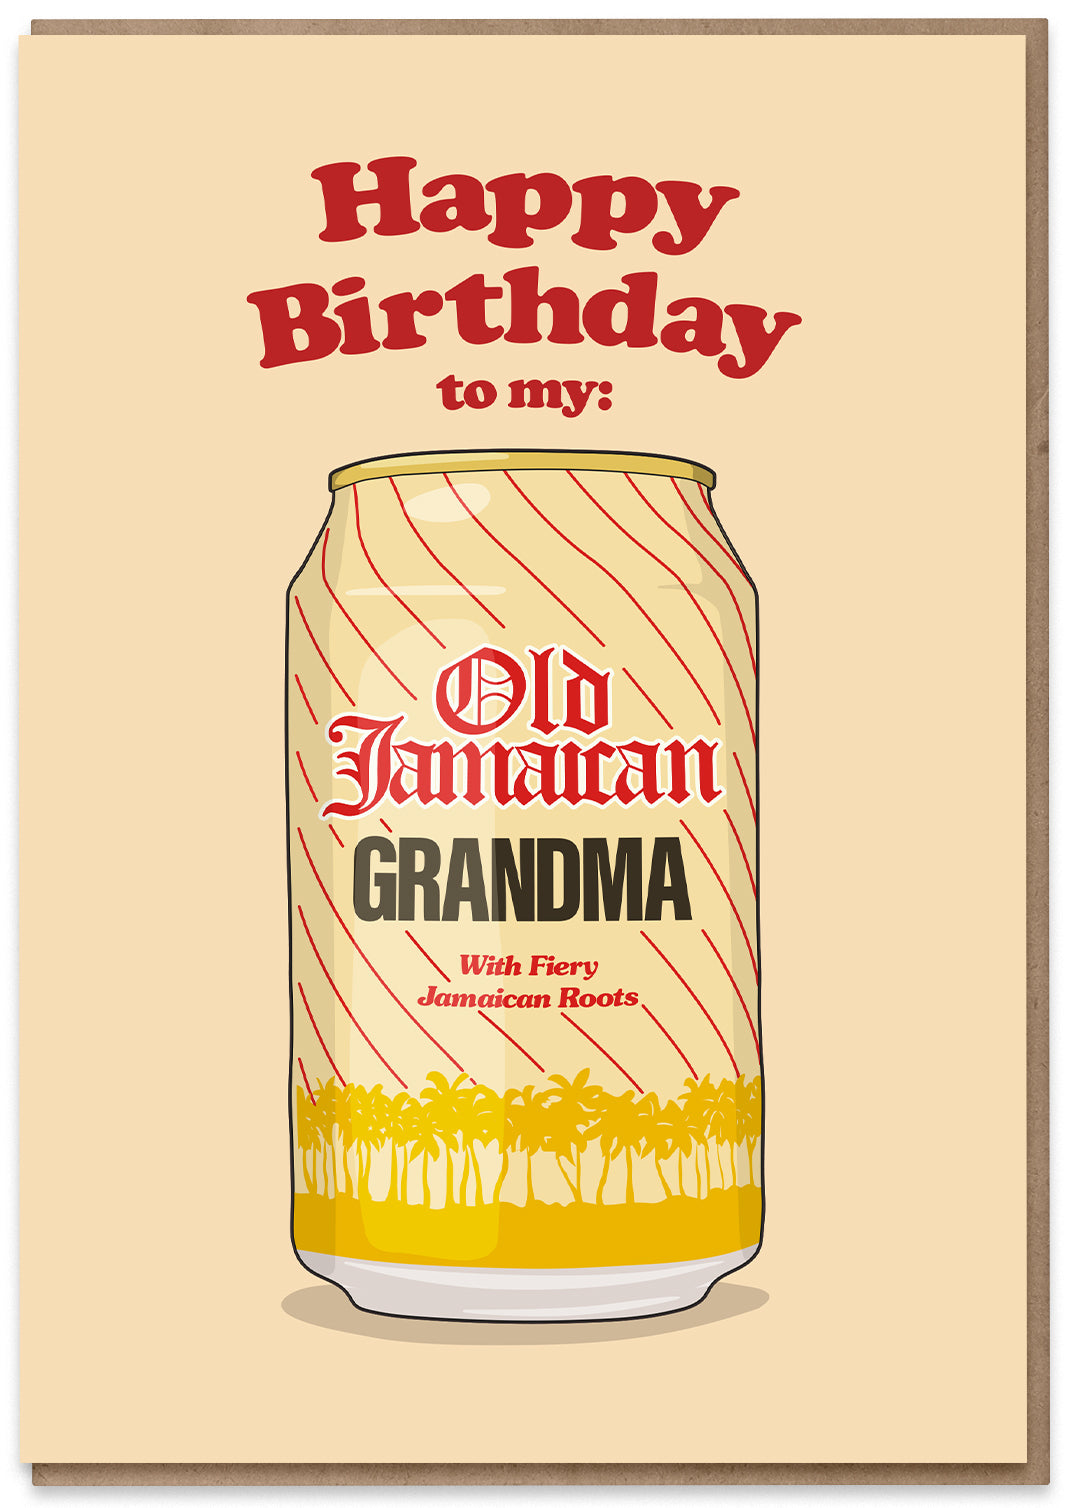 Old Jamaican Grandma's Birthday